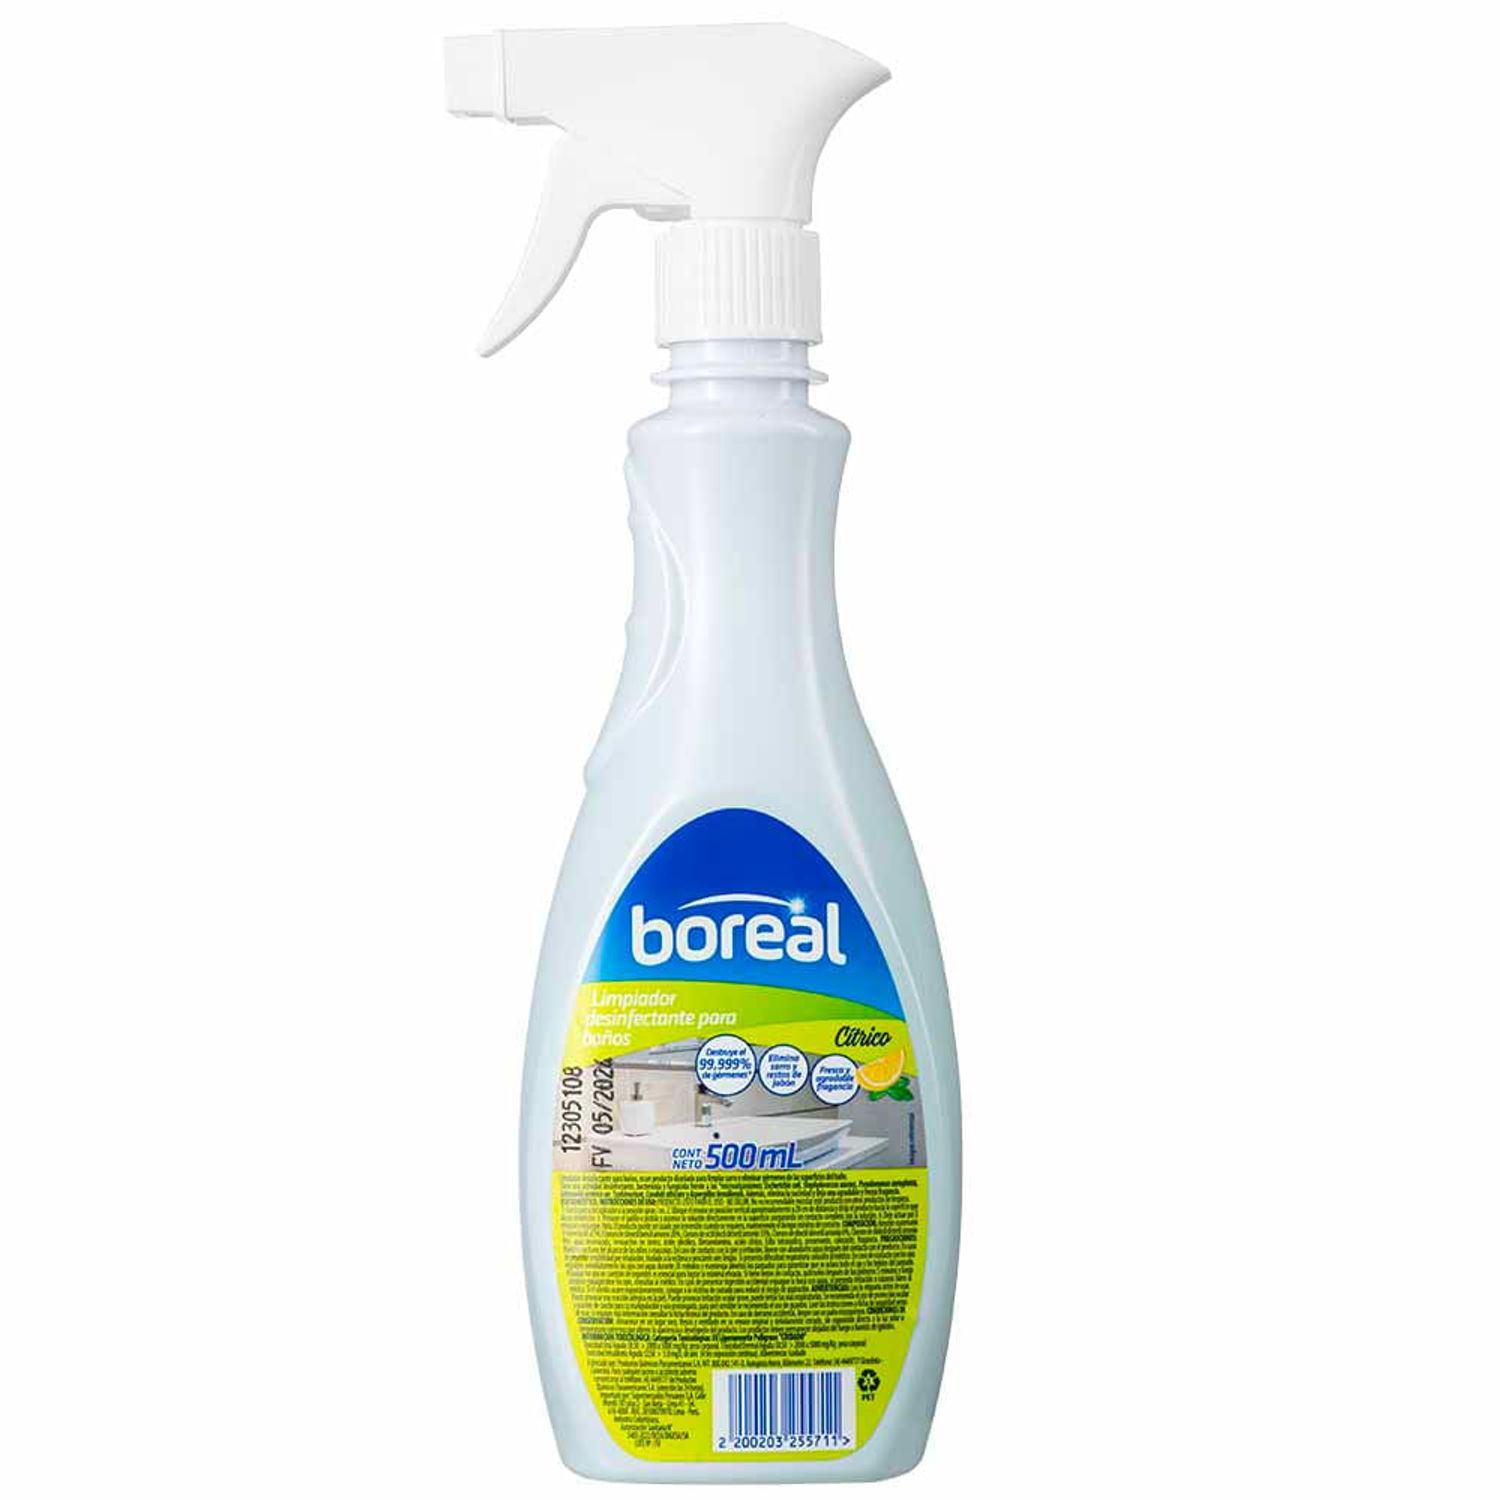 Spray Limpiador Desinfectante de un solo paso para desinfectar y